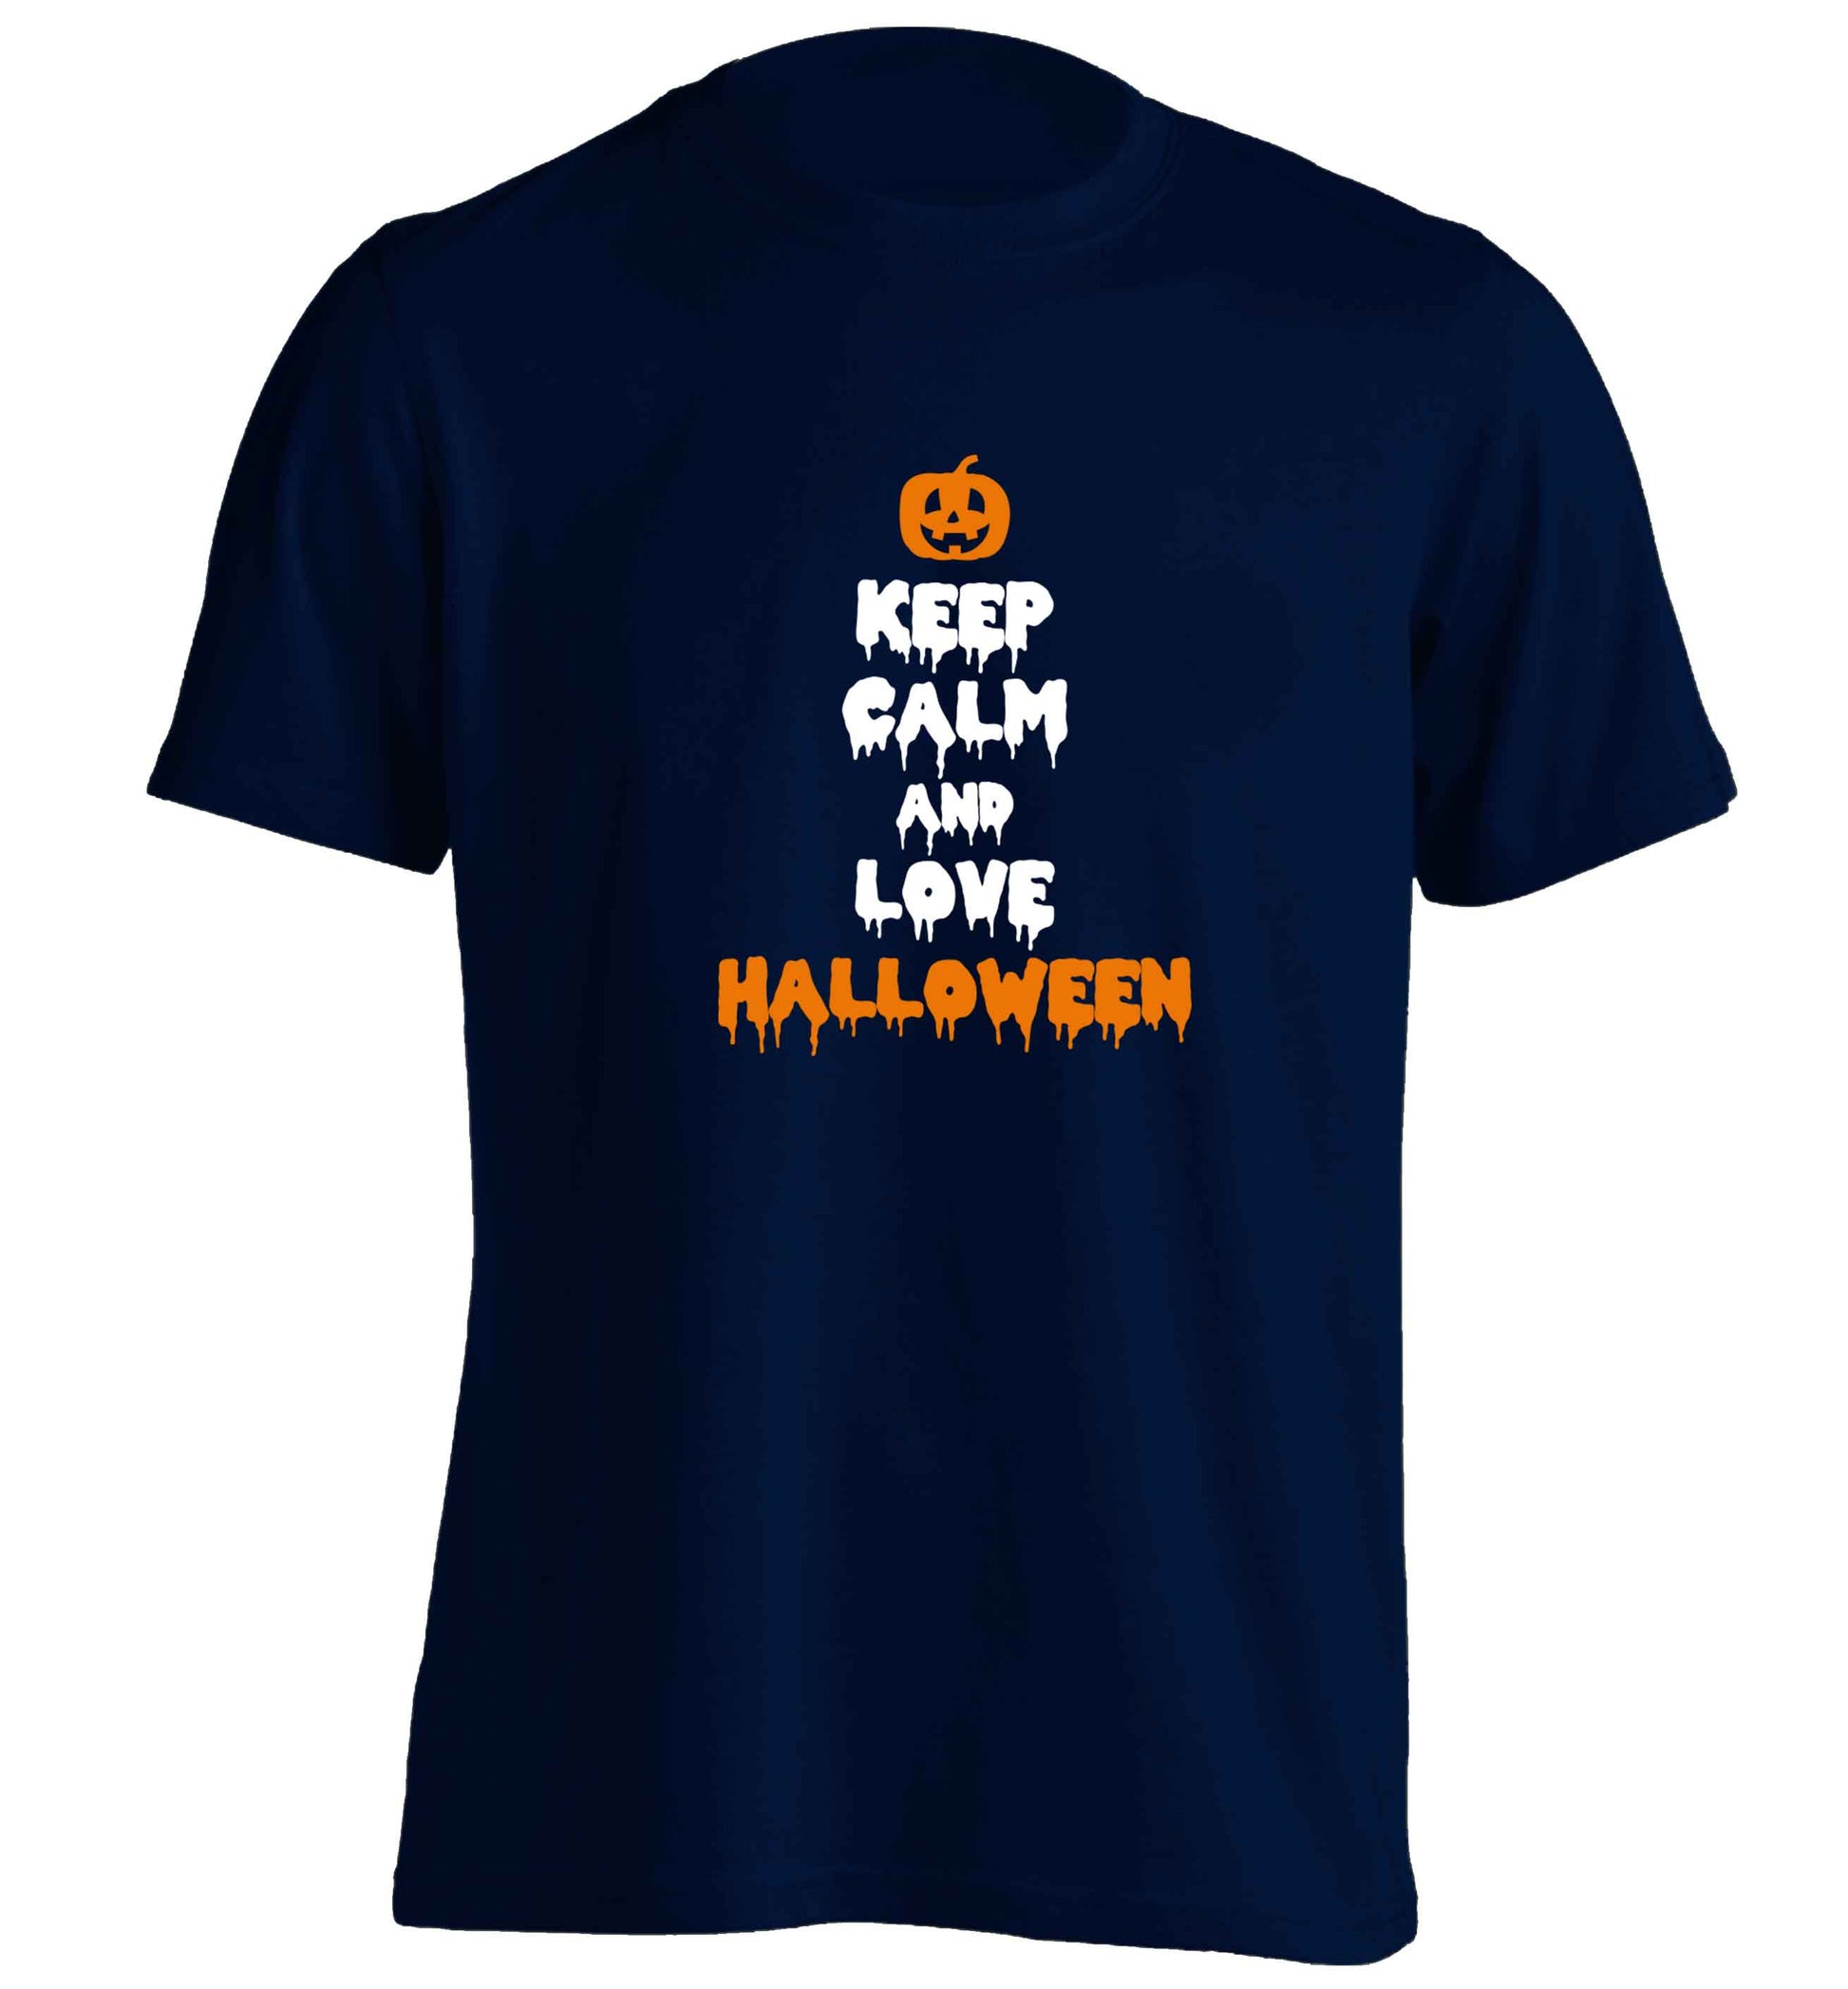 Keep calm and love halloween adults unisex navy Tshirt 2XL